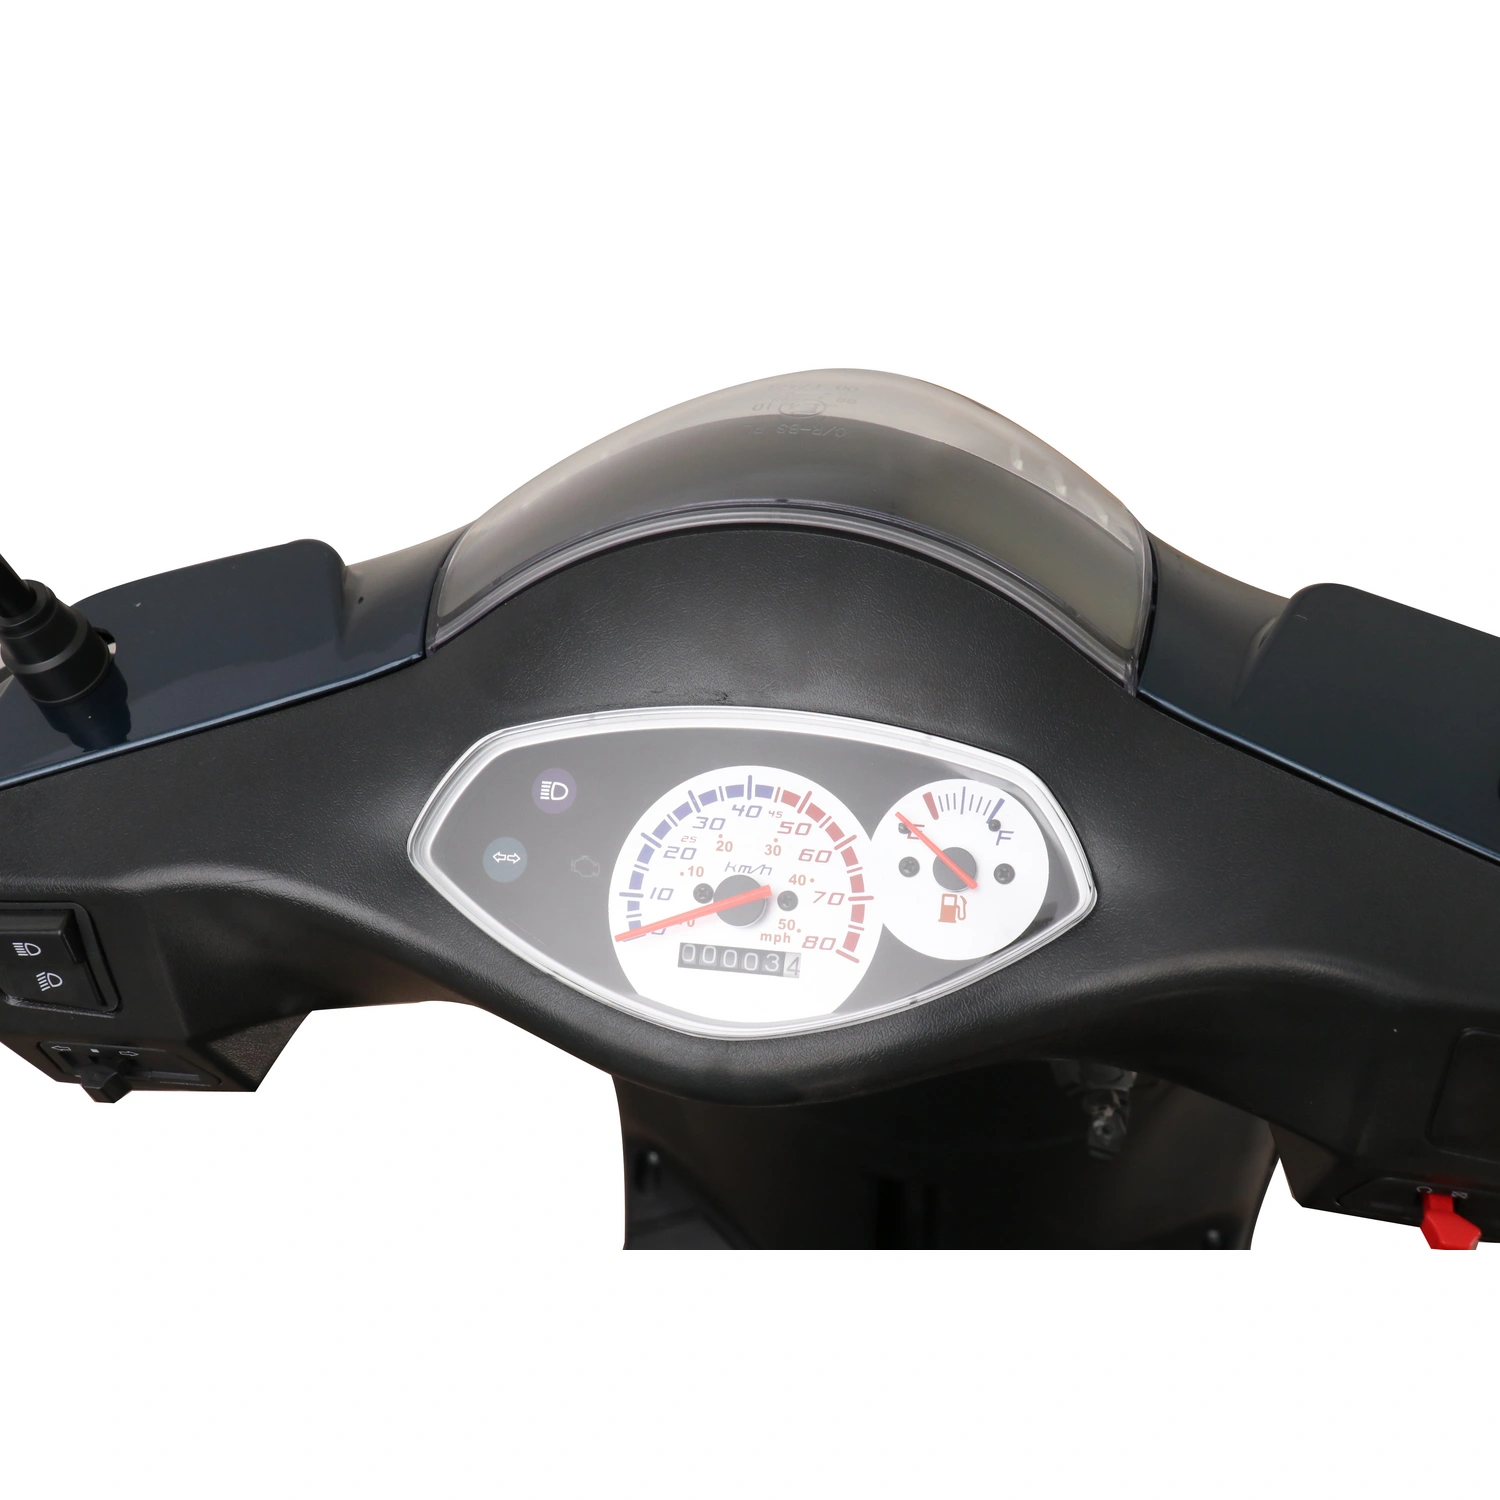 GT UNION Motorroller »Matteo«, 50 45 5 Euro cm³, km/h